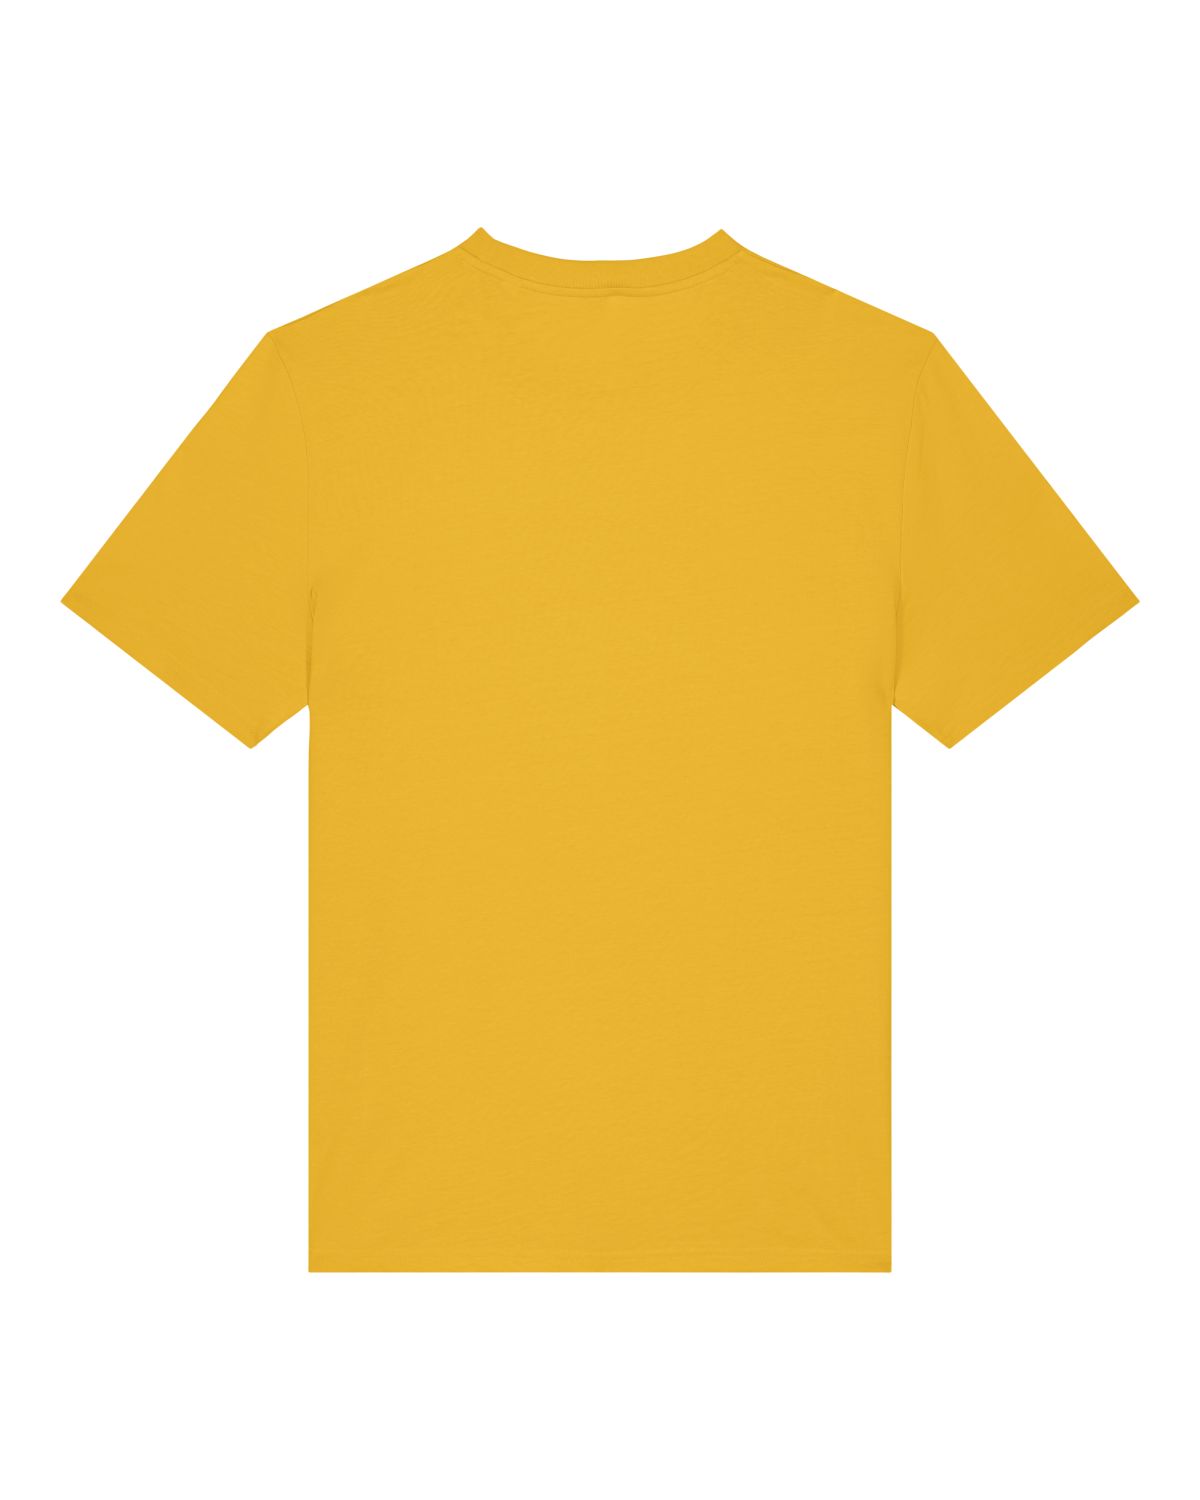 UU Unisex T-shirt - yellow